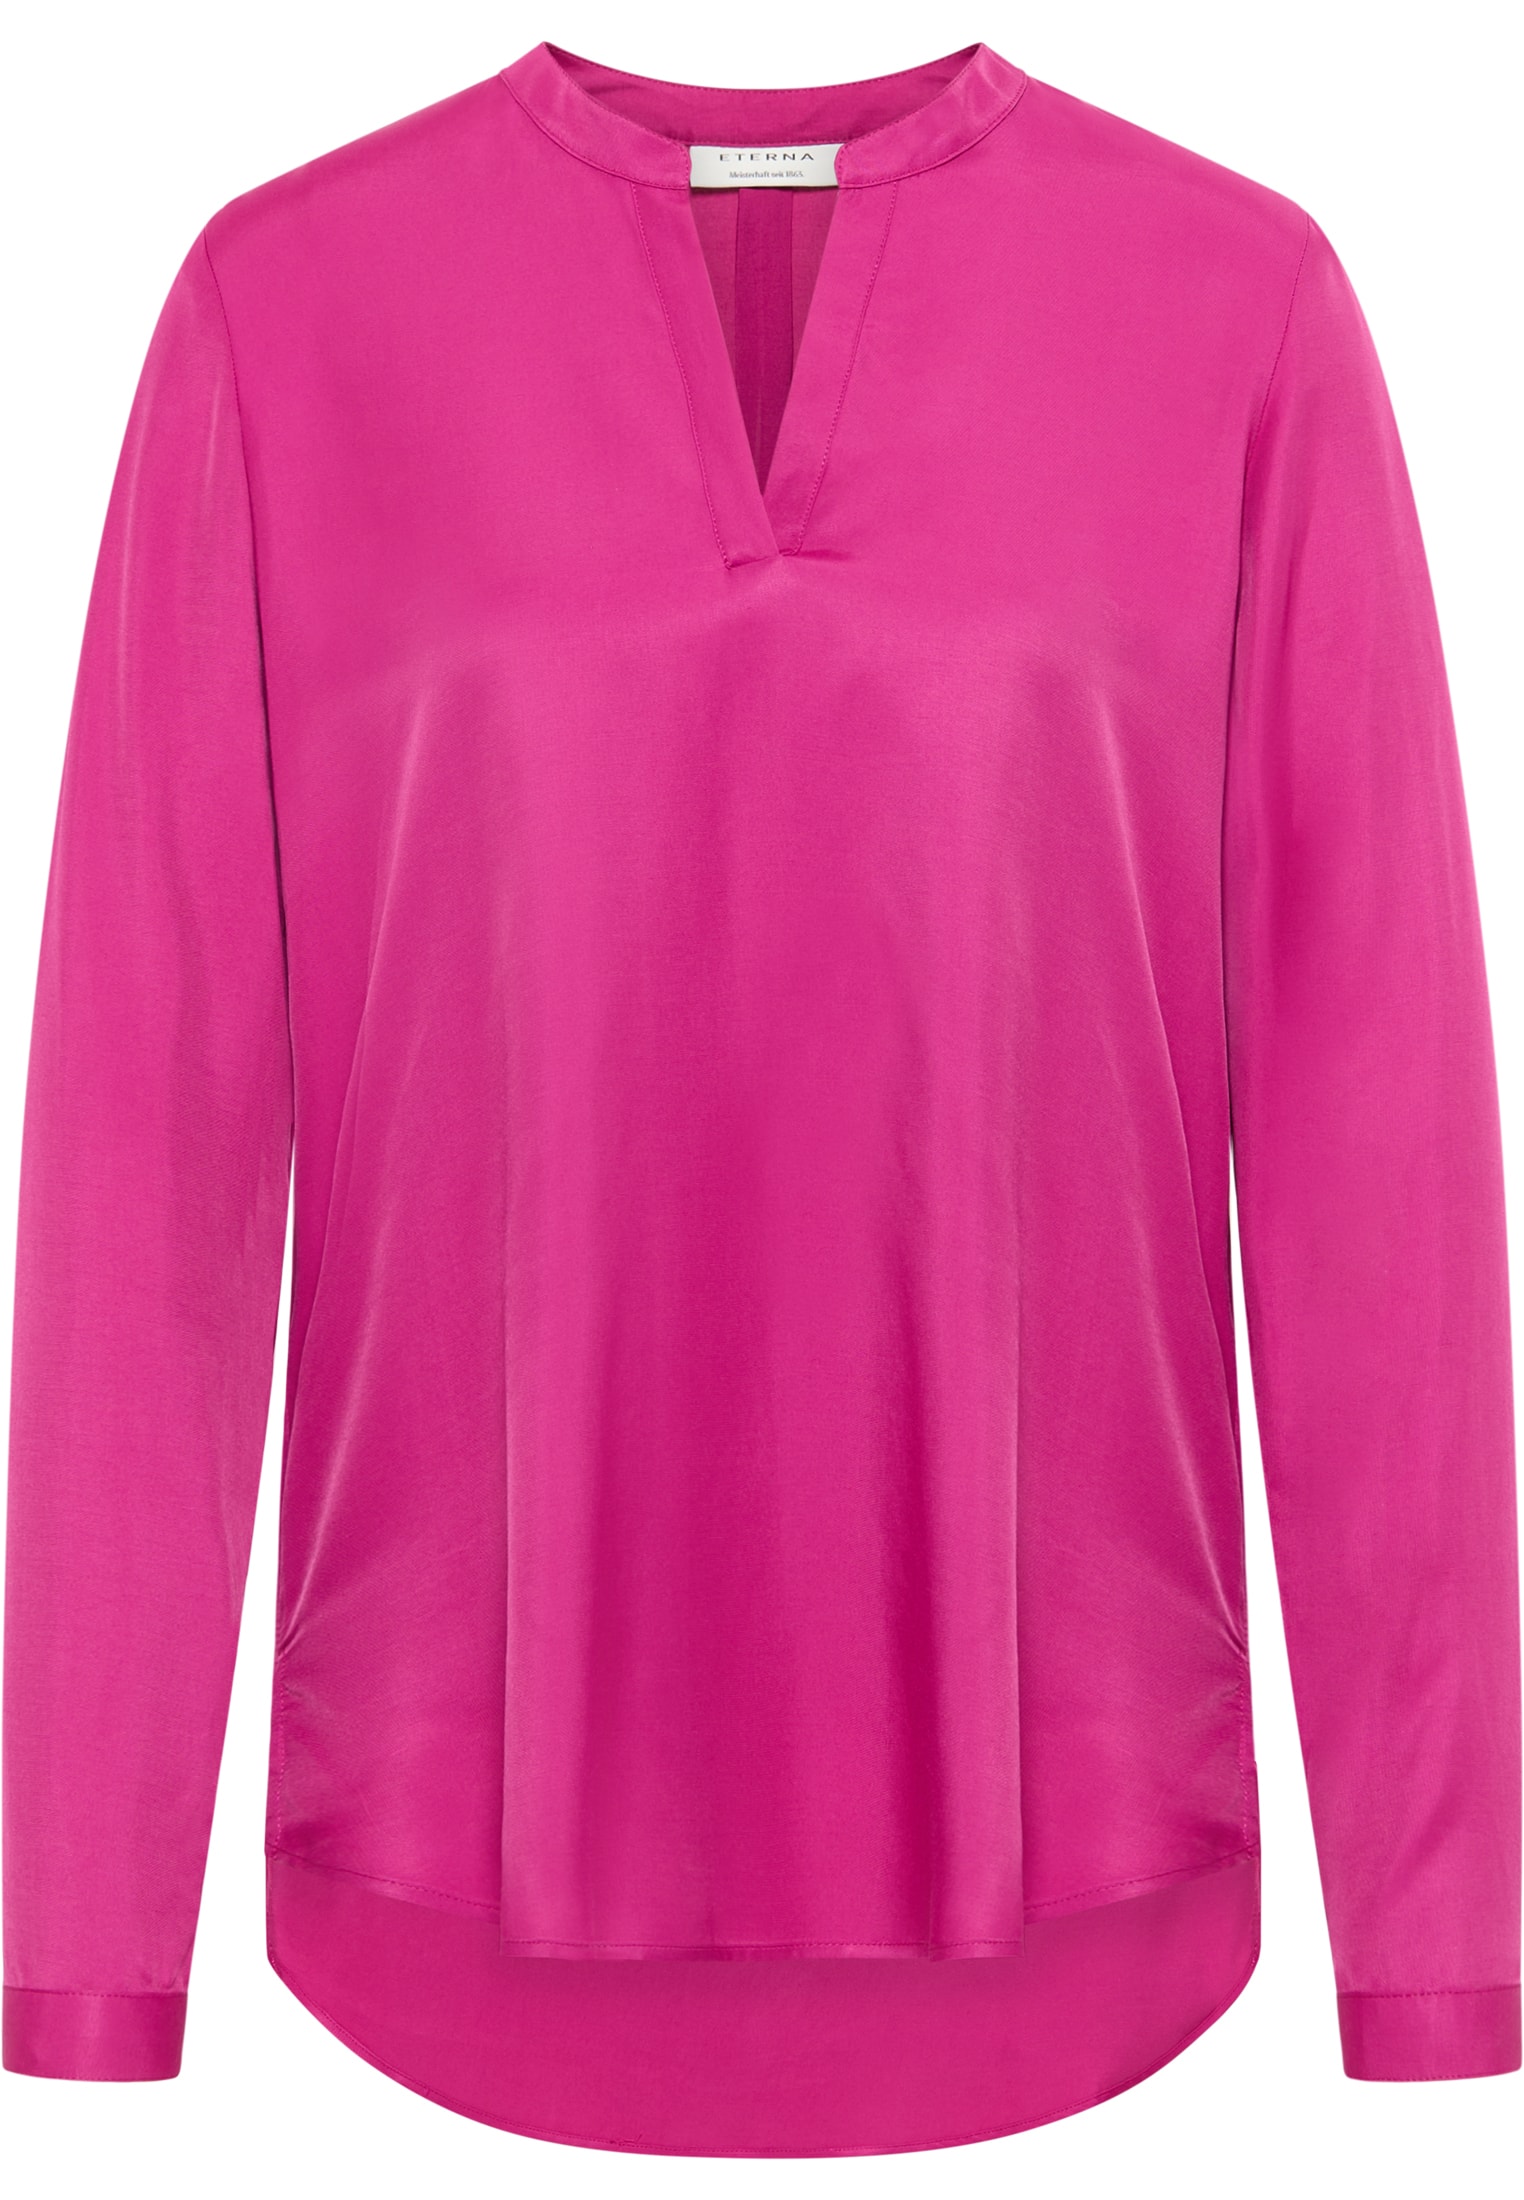 Viscose Shirt 34 pink unifarben | | 2BL00329-15-31-34-1/1 in Bluse vibrant pink vibrant | | Langarm